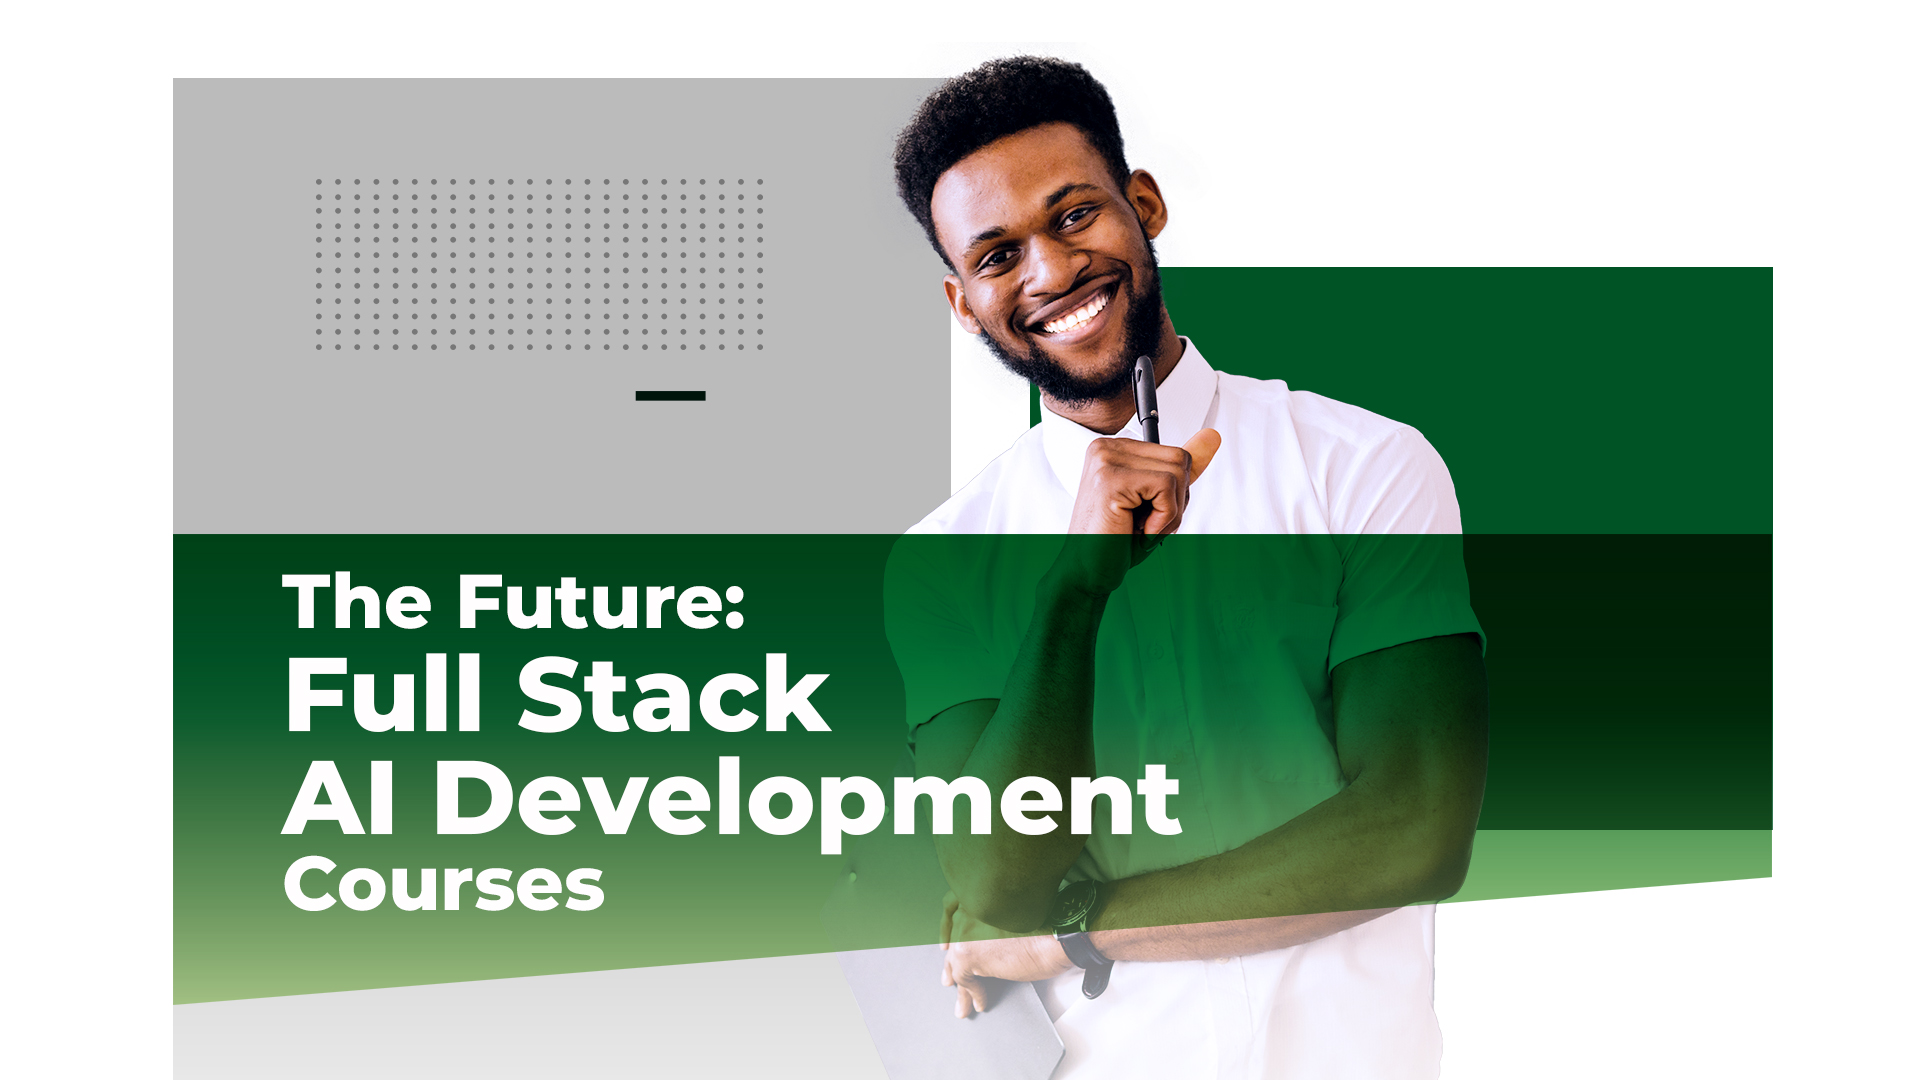 The Future: Full Stack AI Development Courses